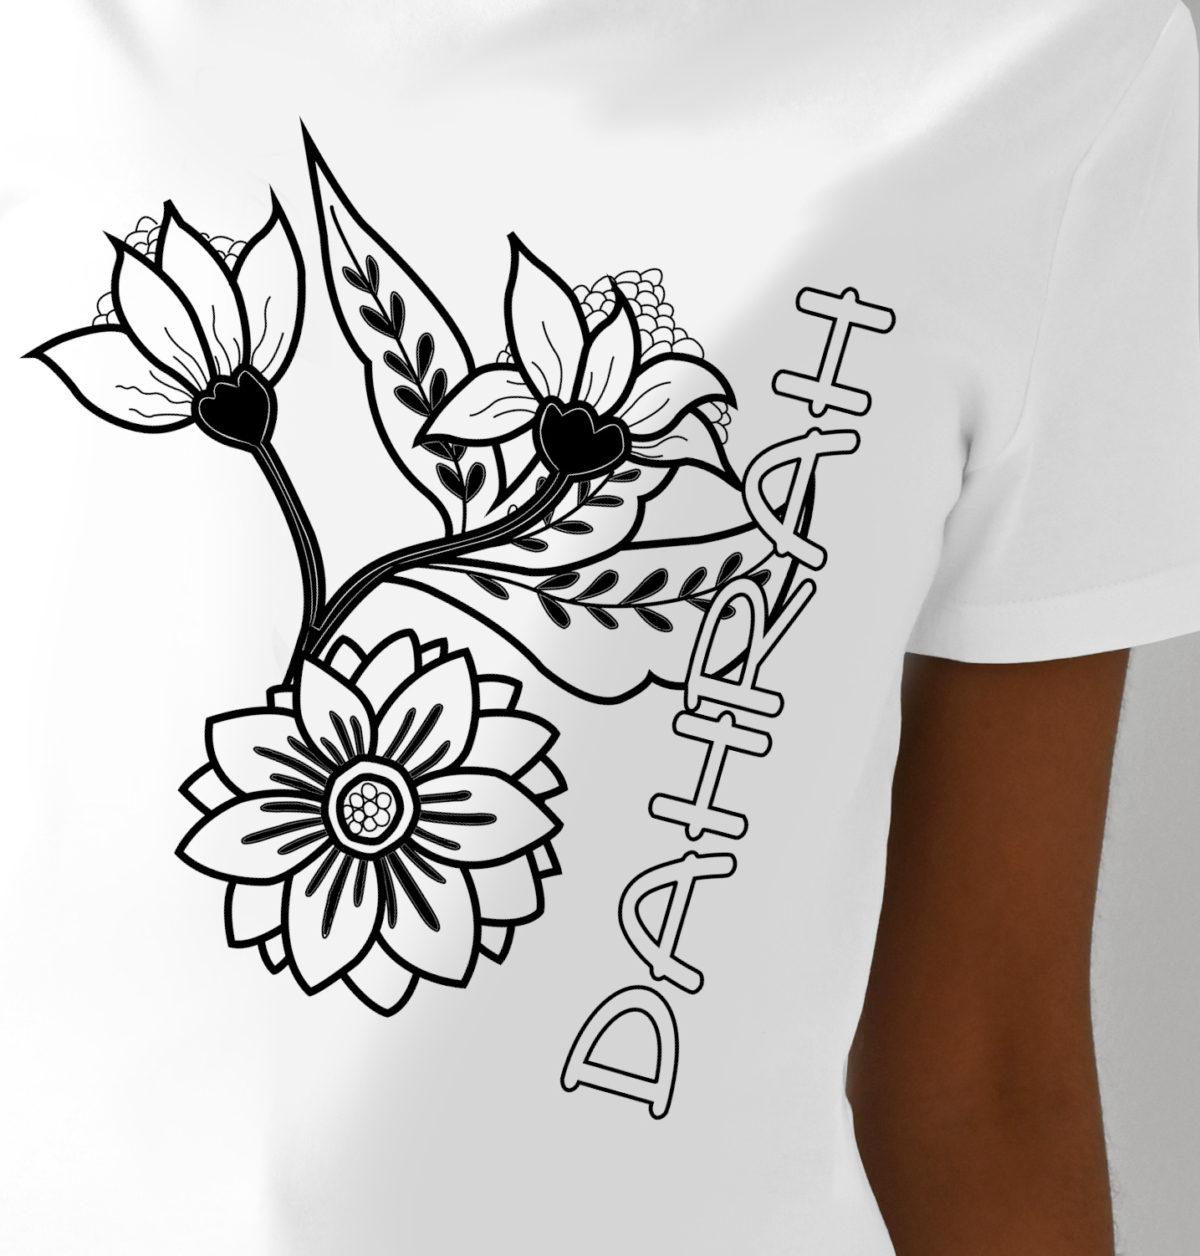 Organic cotton T-shirt with print of beautiful flowers by Dahrah Darah.